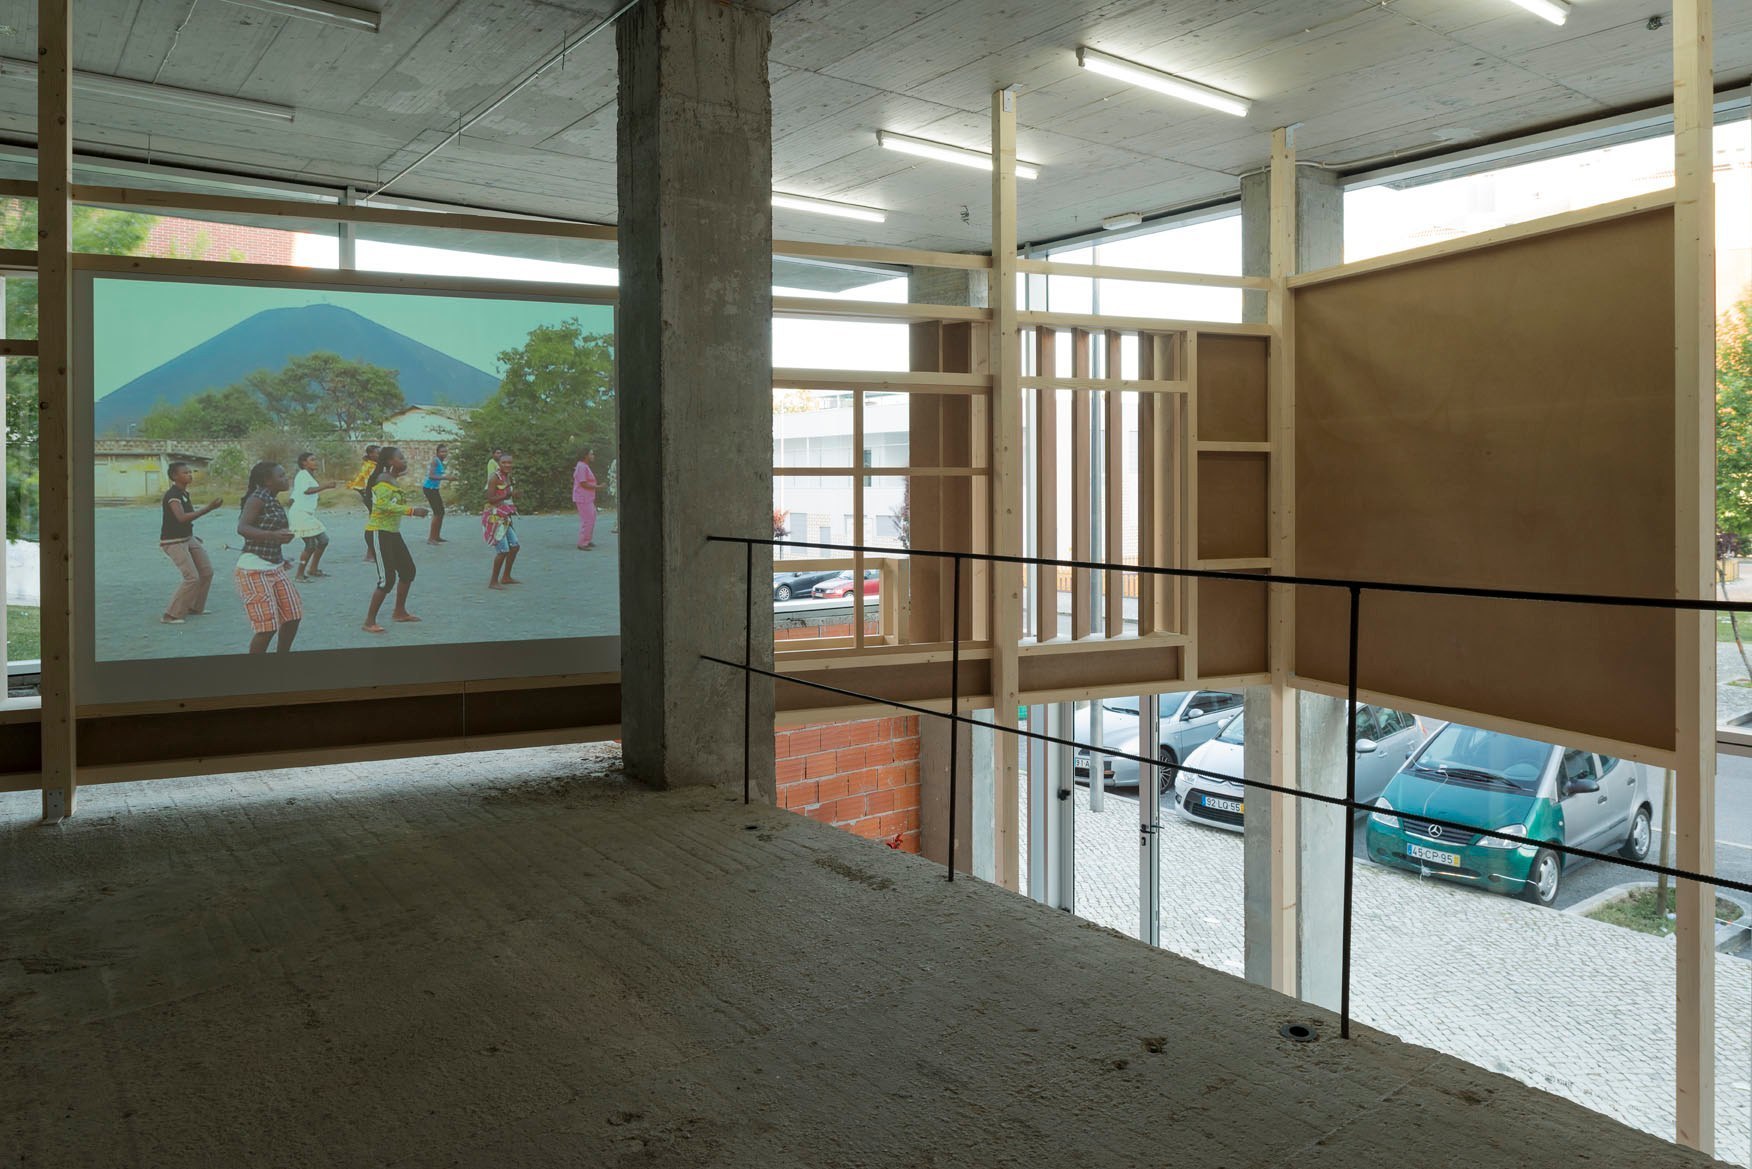 Ângela Ferreira, Indépendance Cha Cha, 2014, installation view, Lumiar Cité